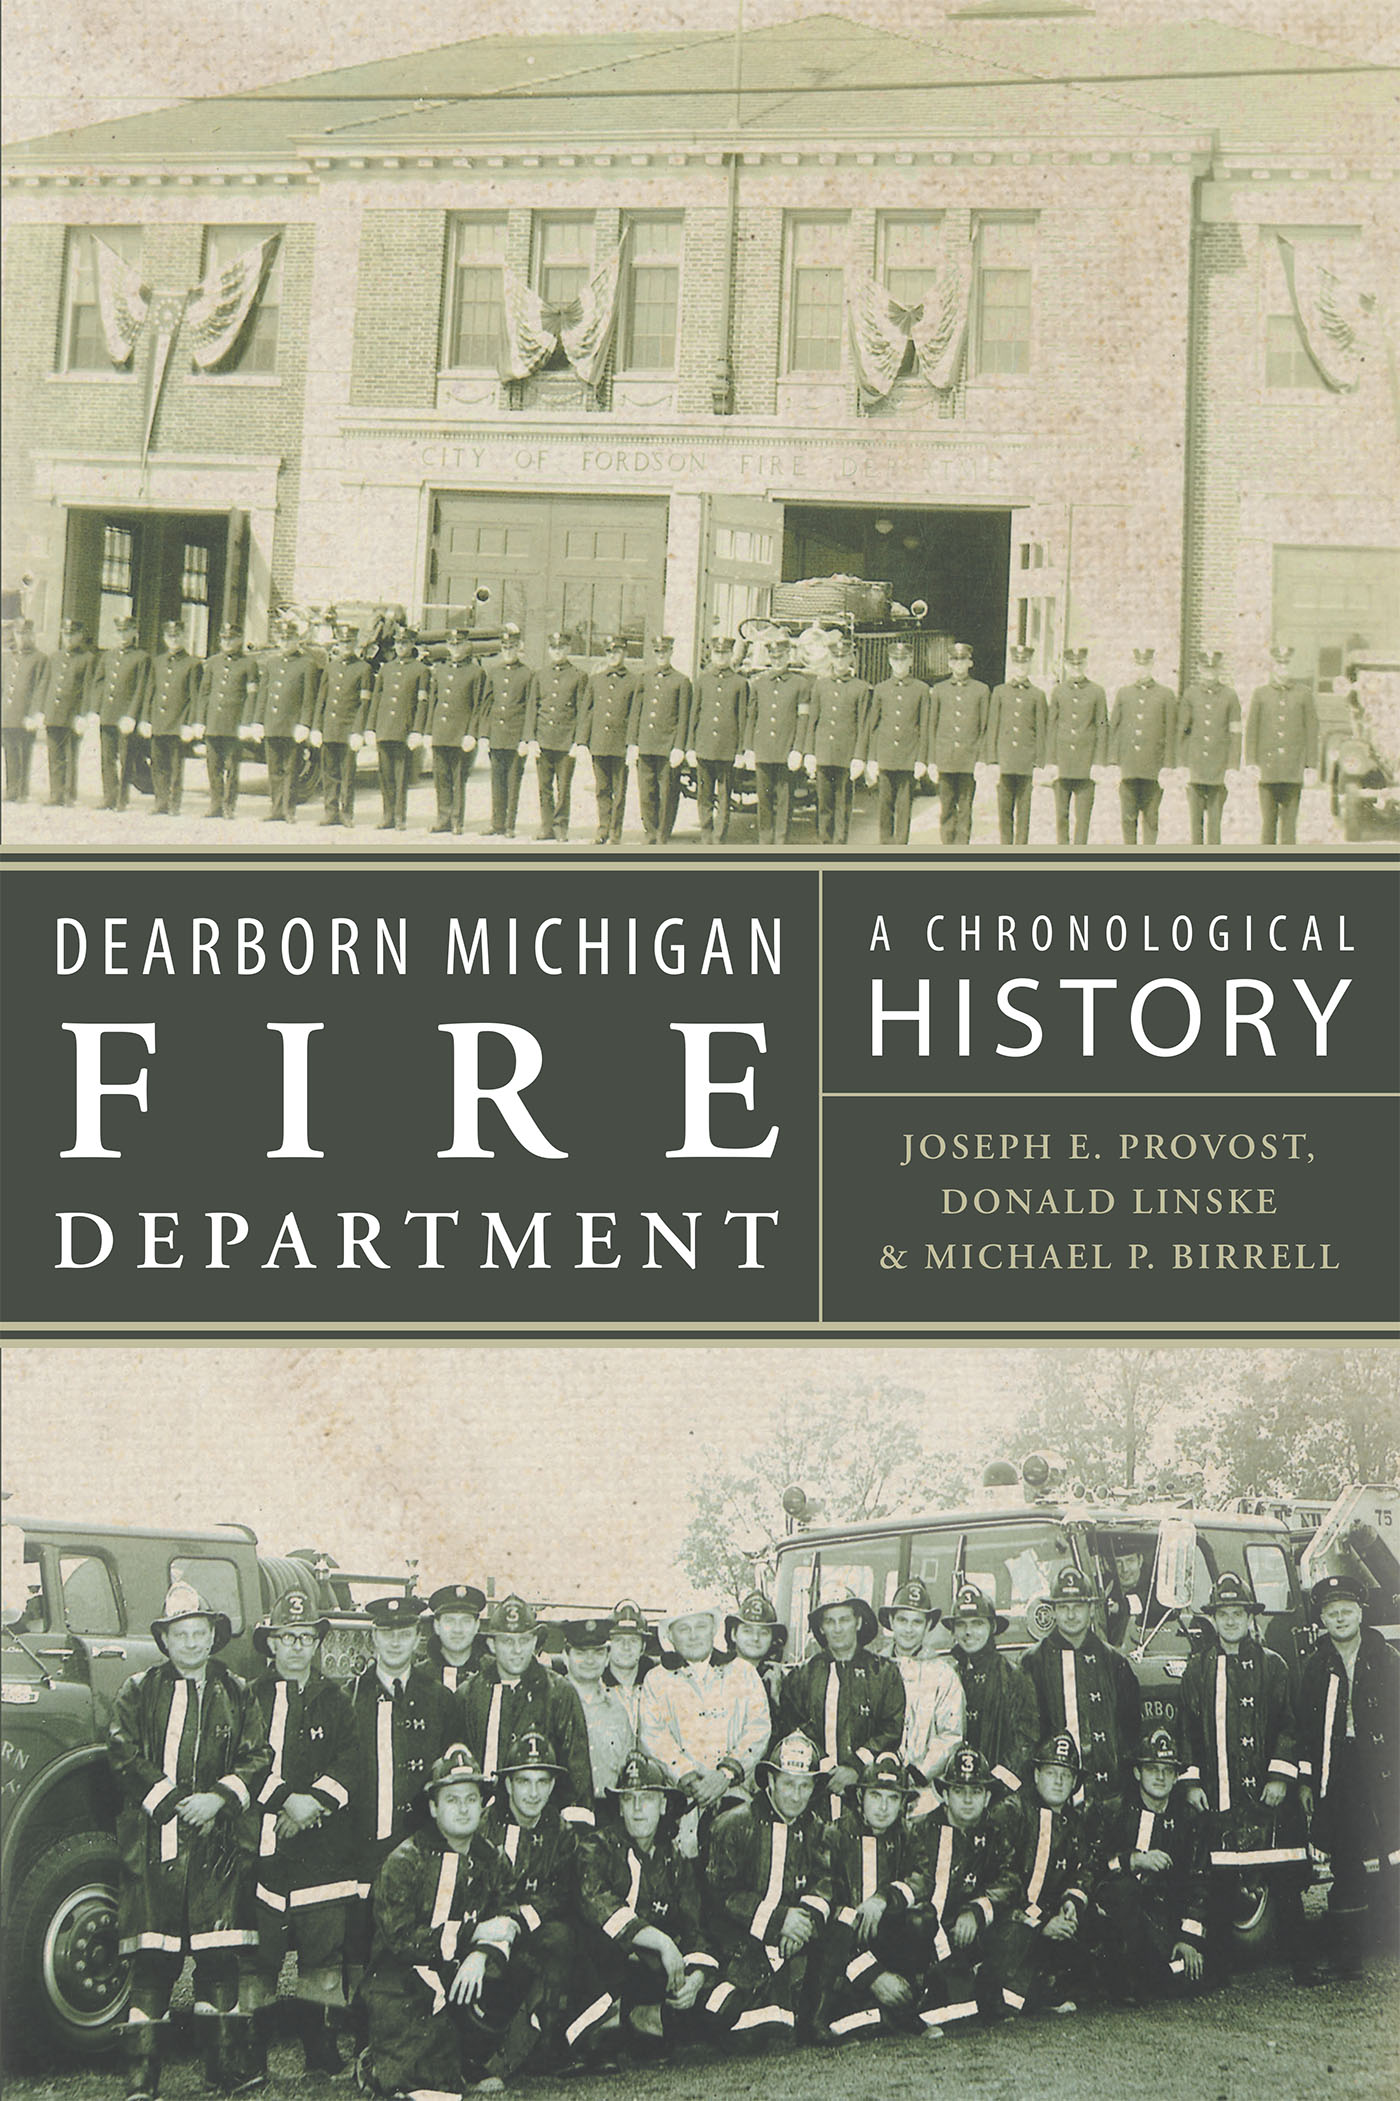 Dearborn Michigan Fire Department Cover Image